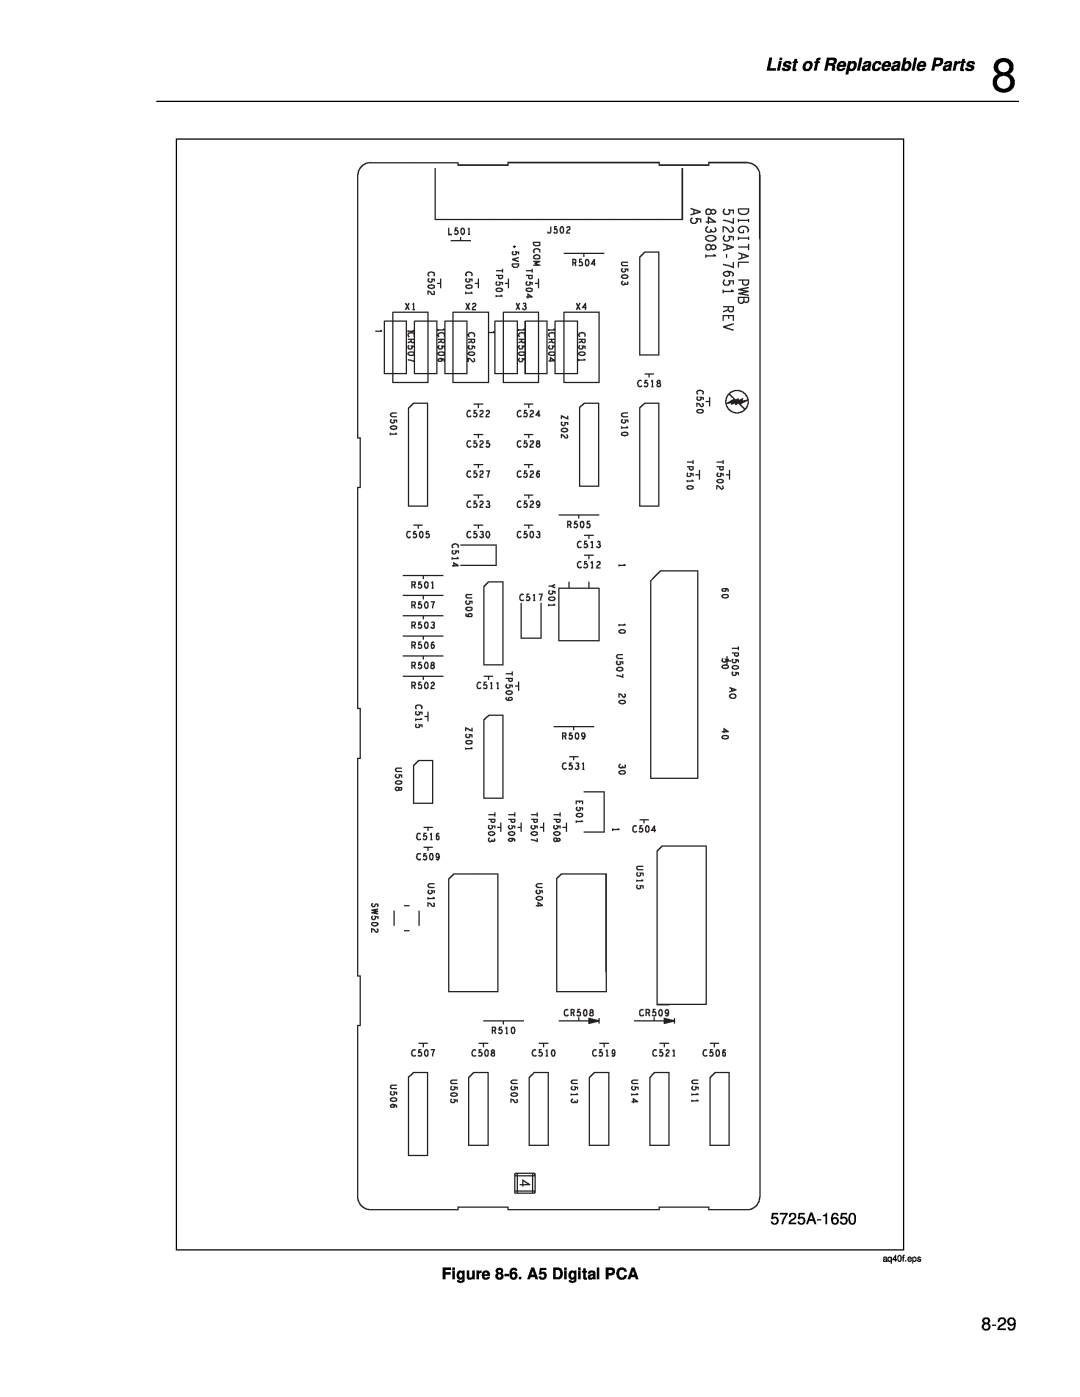 Fluke instruction manual List of Replaceable Parts, 5725A-1650, 6.A5 Digital PCA, aq40f.eps 